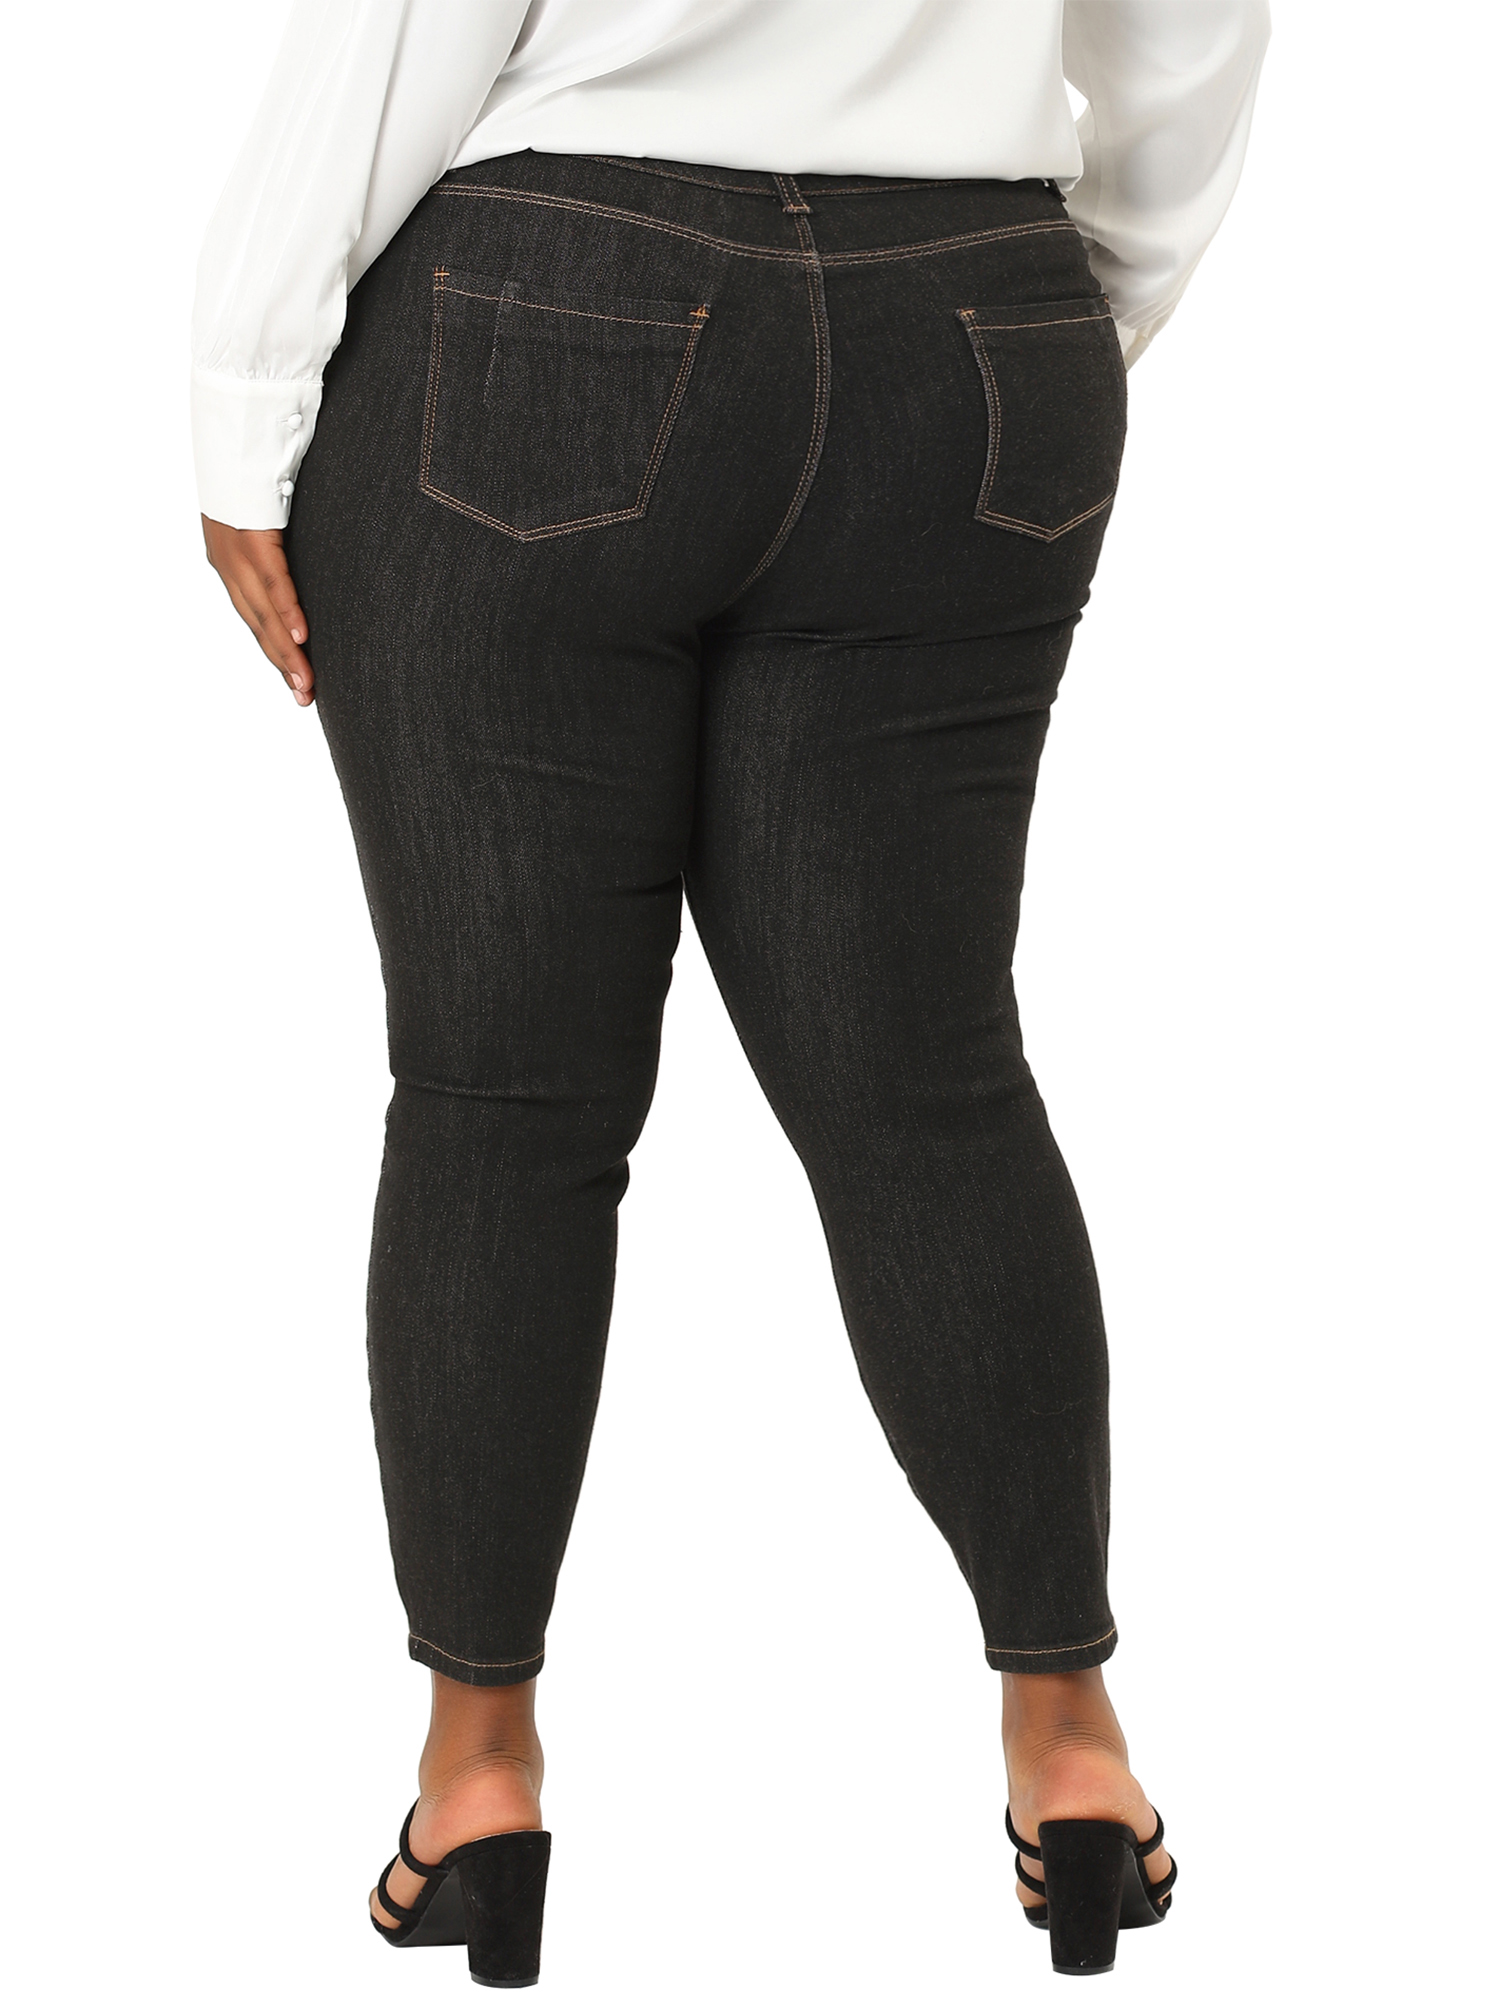 MODA NOVA Junior's Plus Size Jeans Denim Stretch Work Contrast Color Line Skinny Mid Rise Jeans Black 2X - image 3 of 5